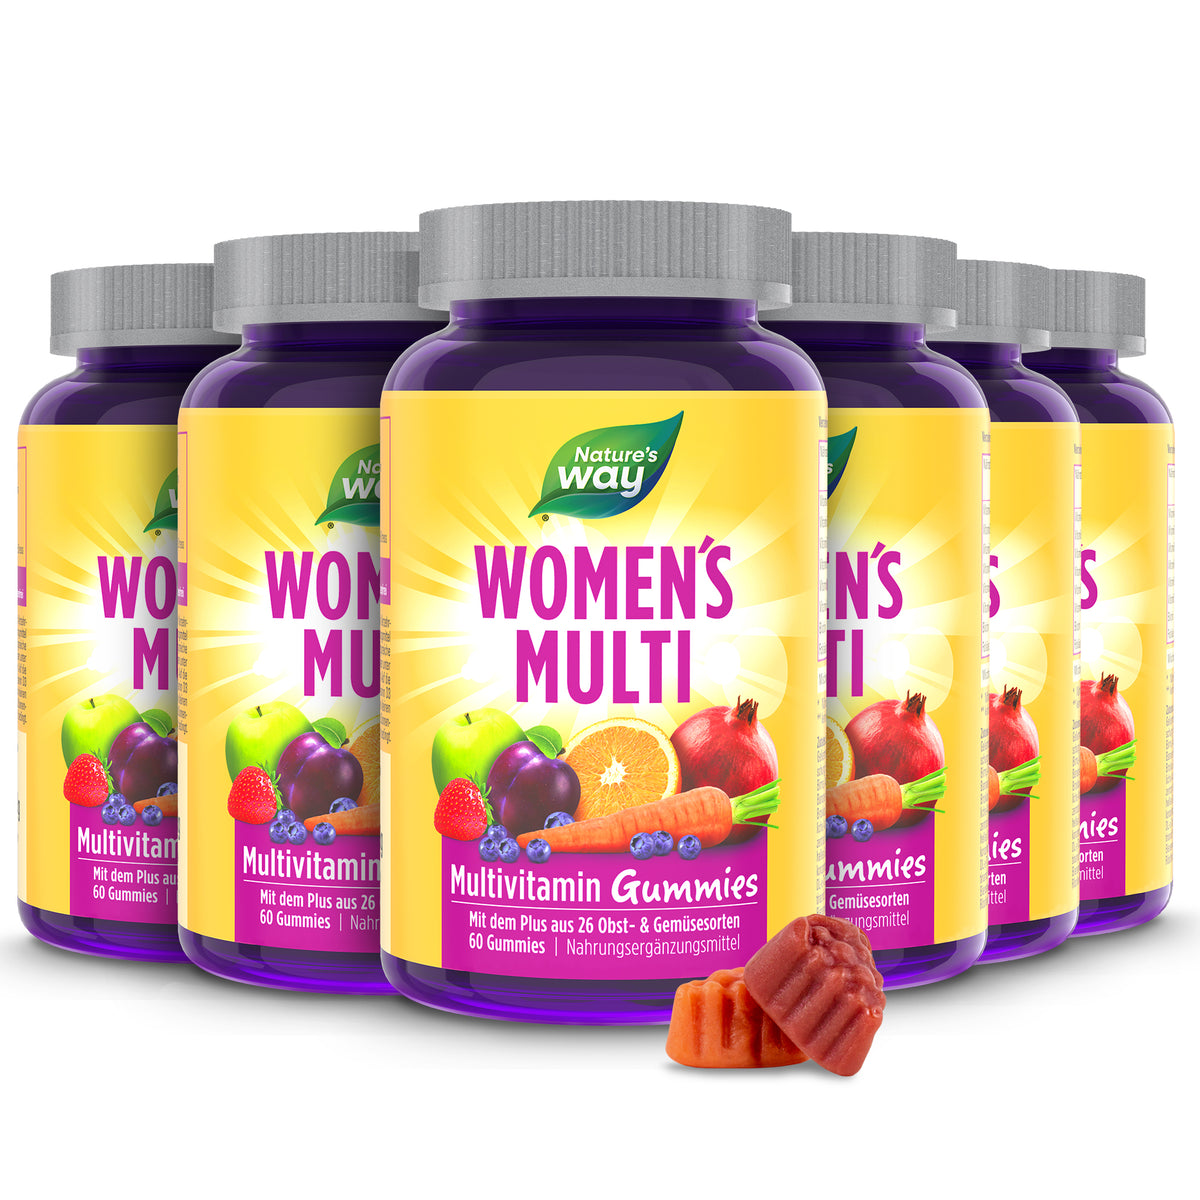 Women’s Multi Multivitamin Gummies